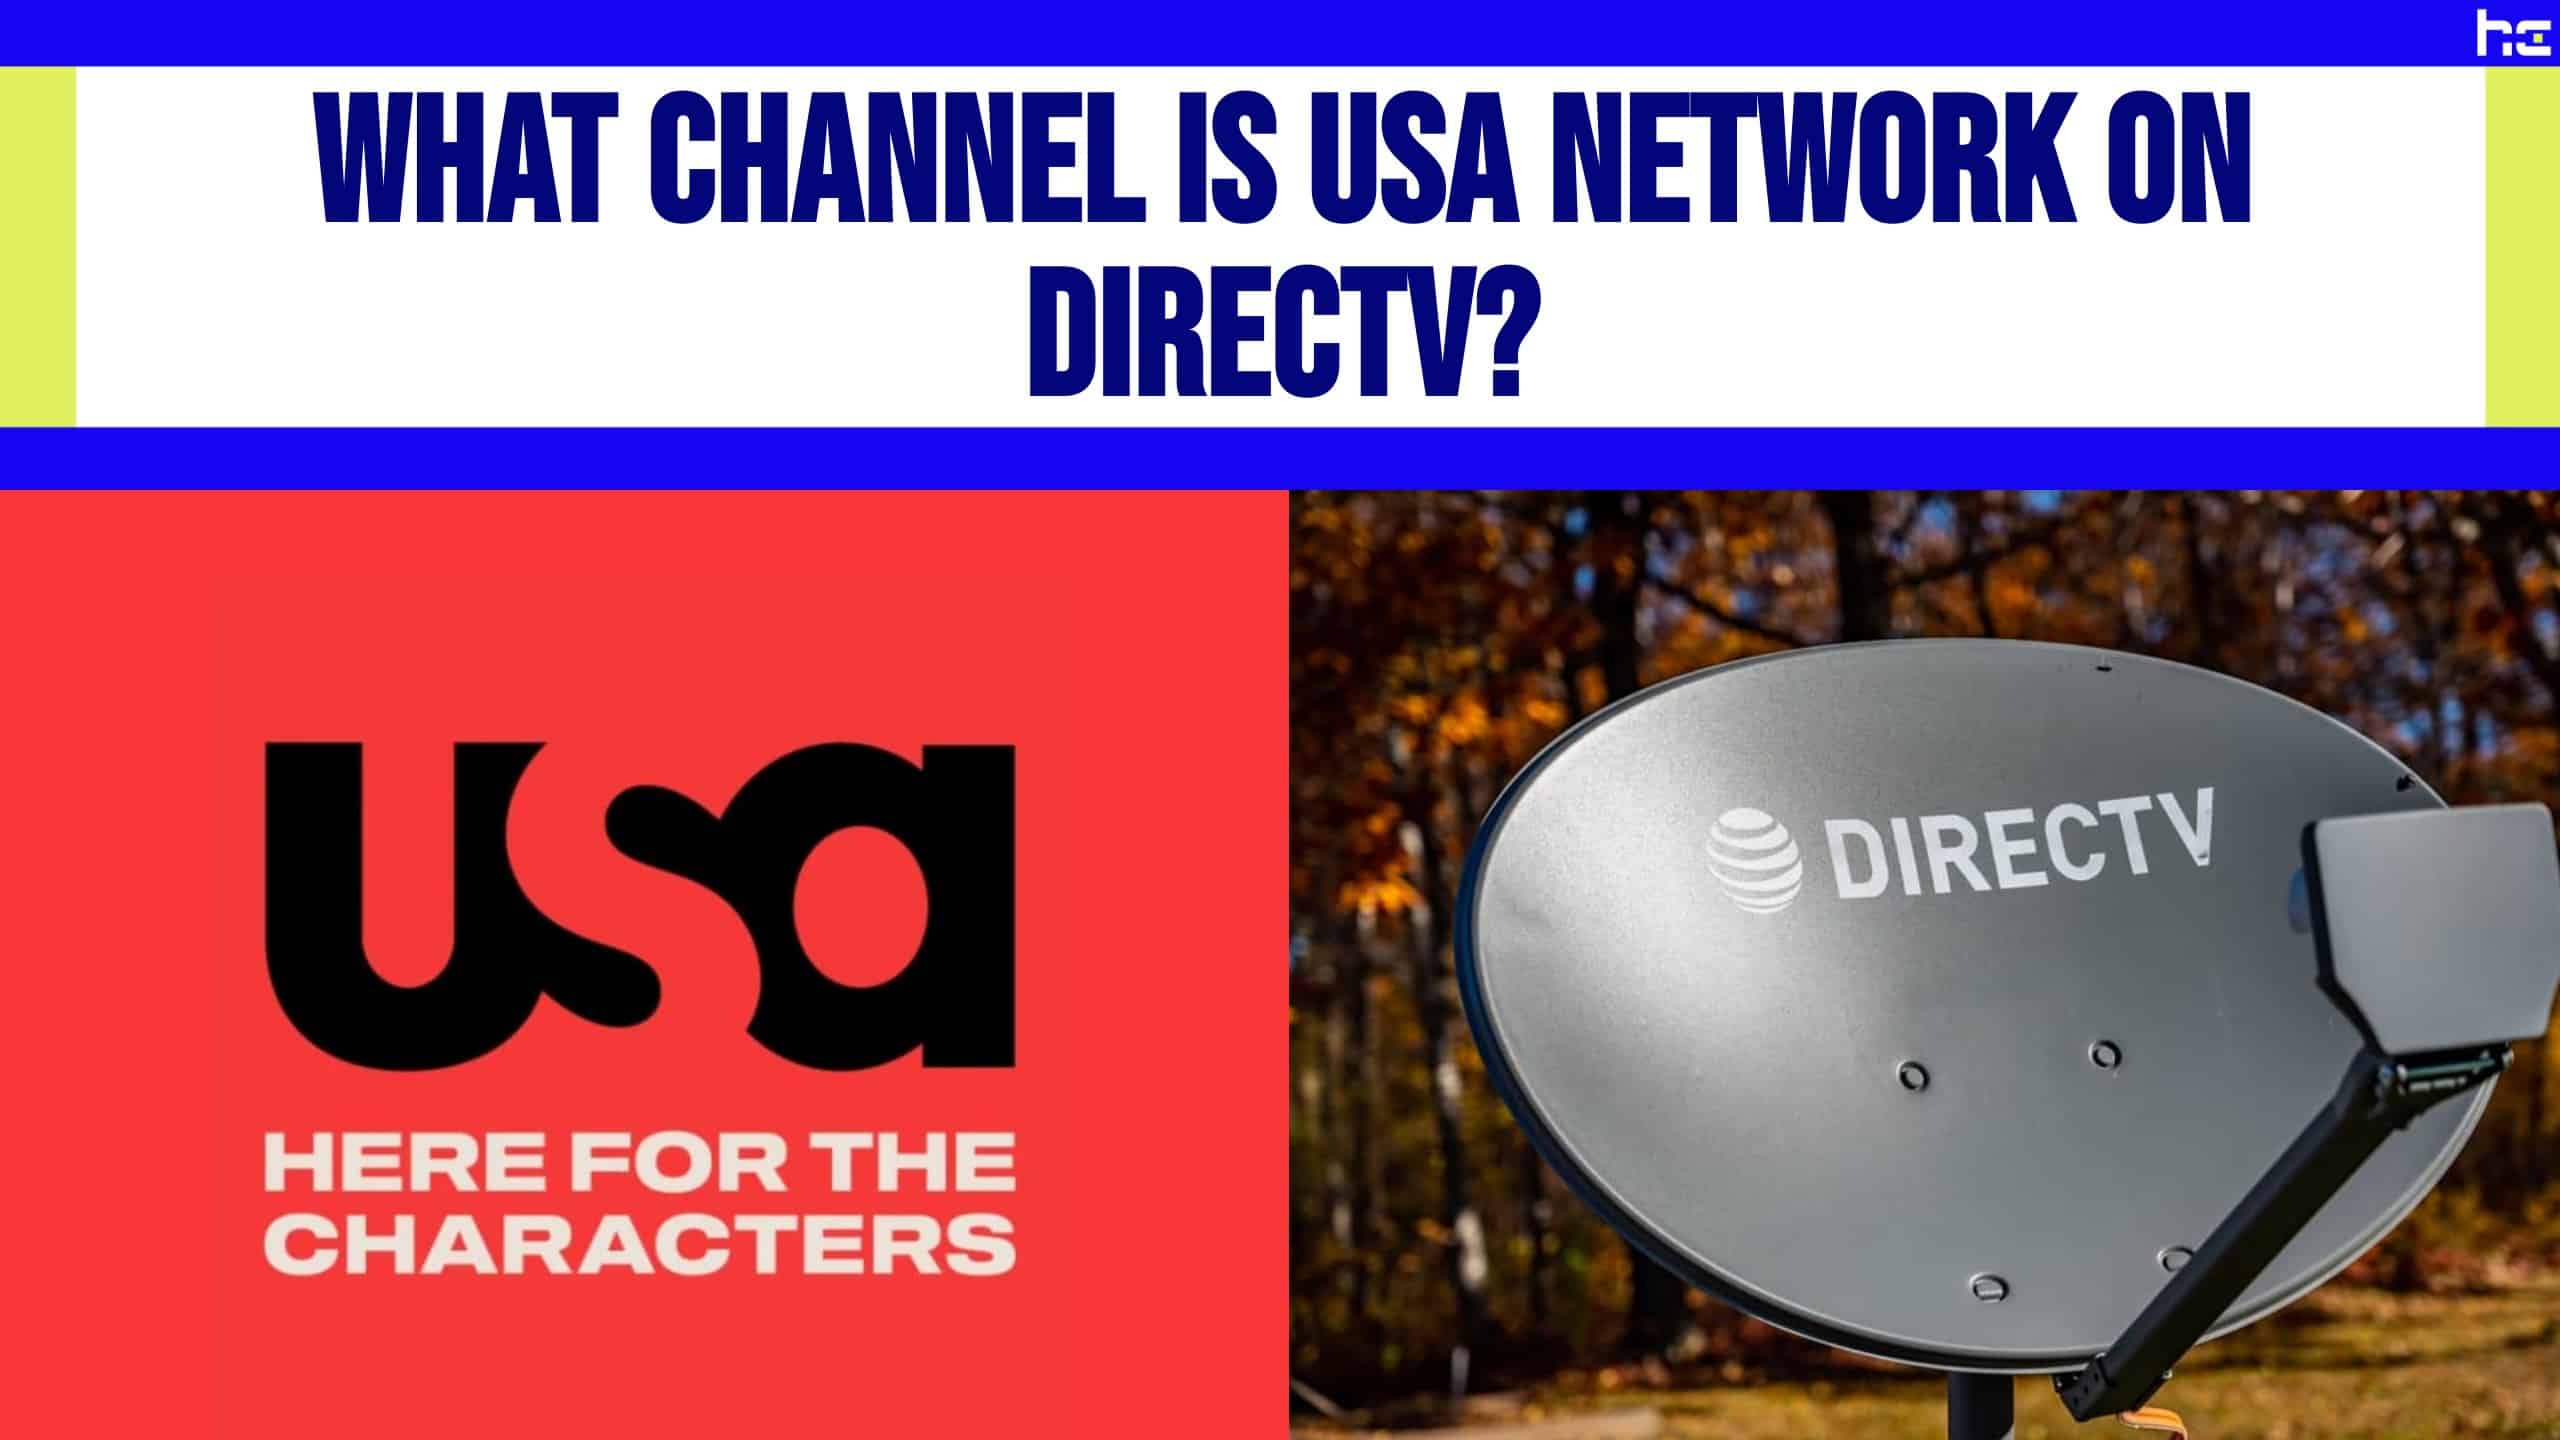 USA Network on DirecTV